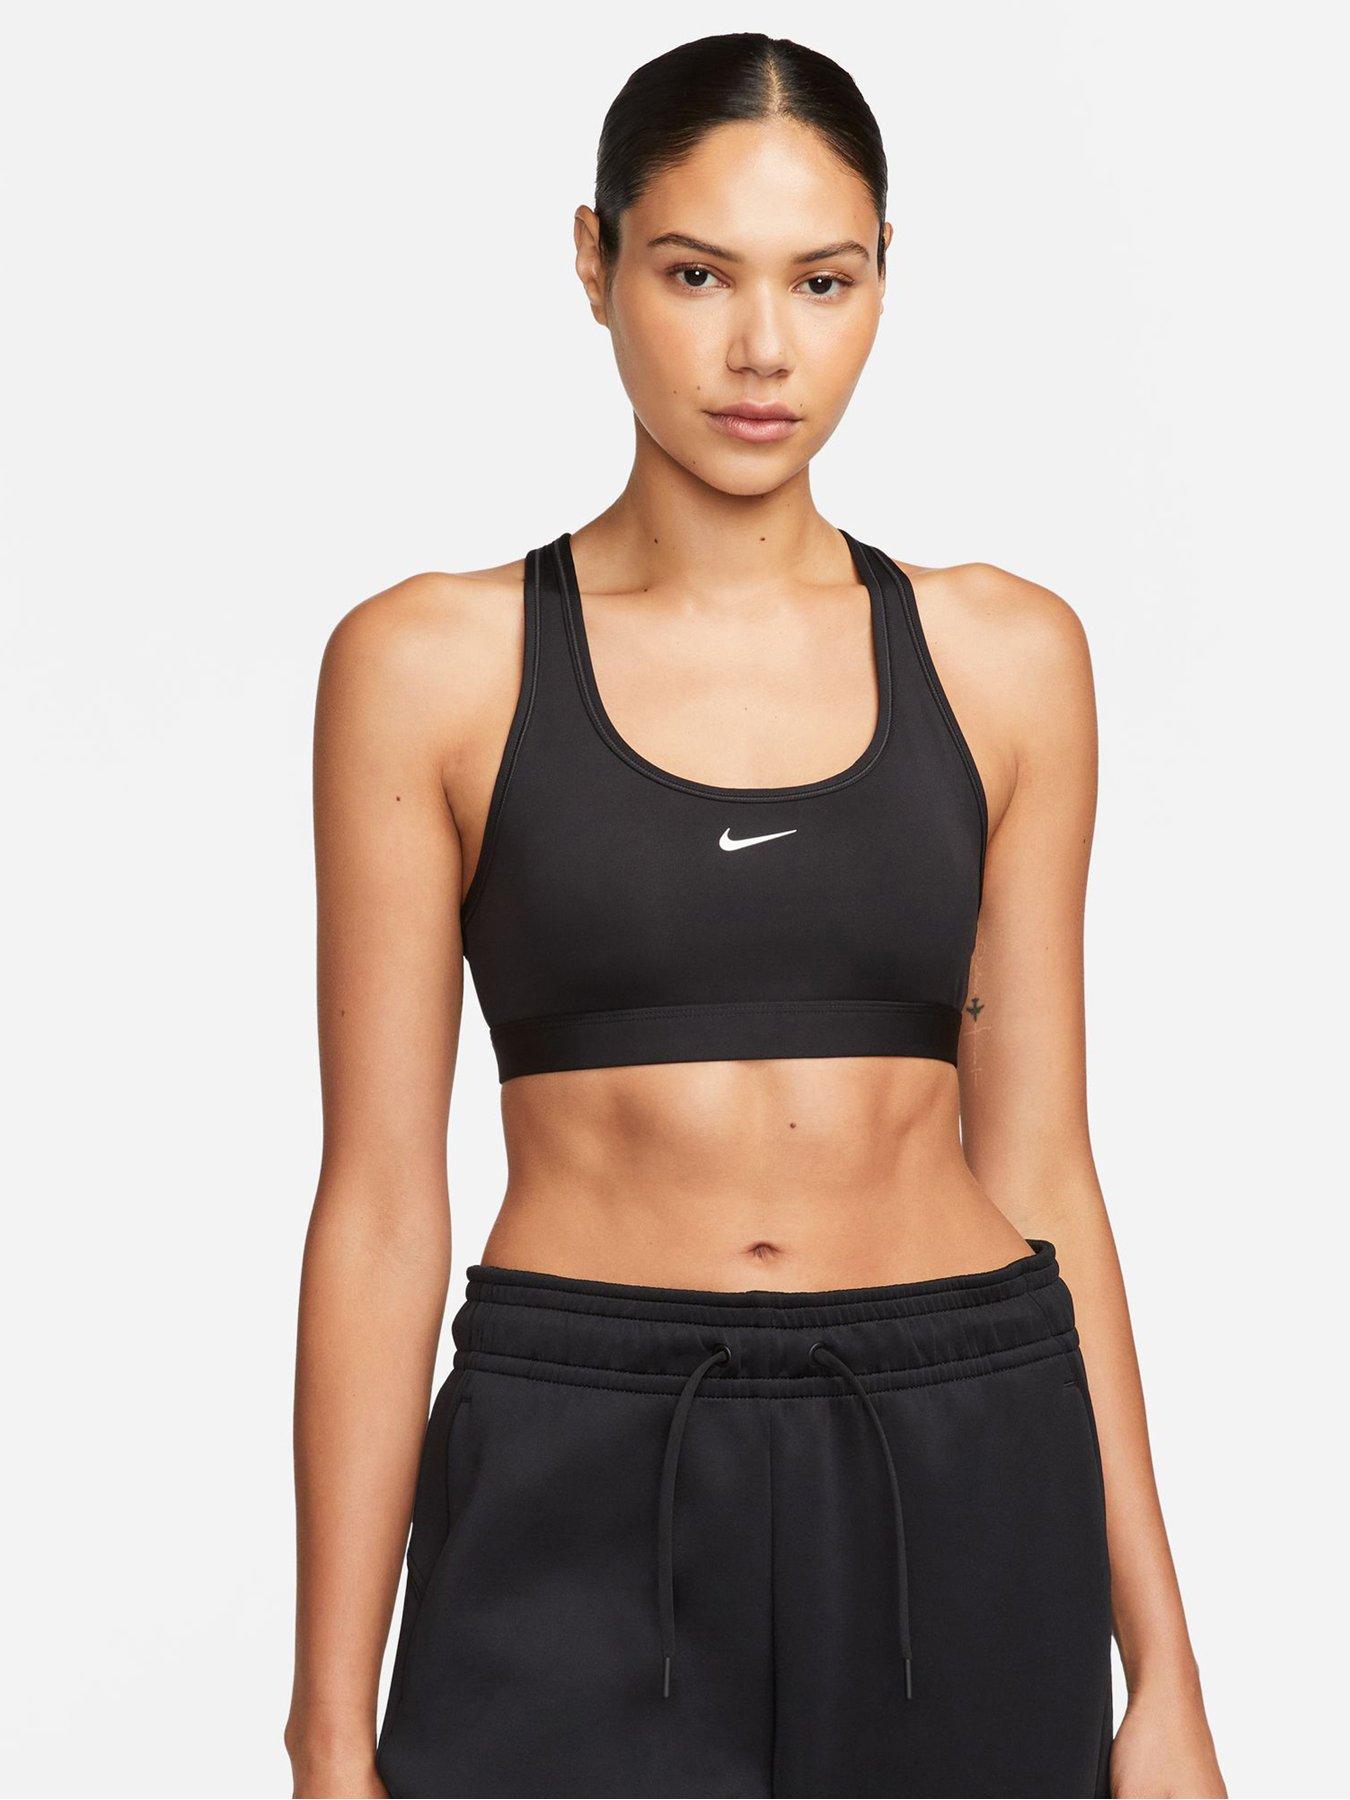 Nike Yoga Indy light support cross strap sports bra in black